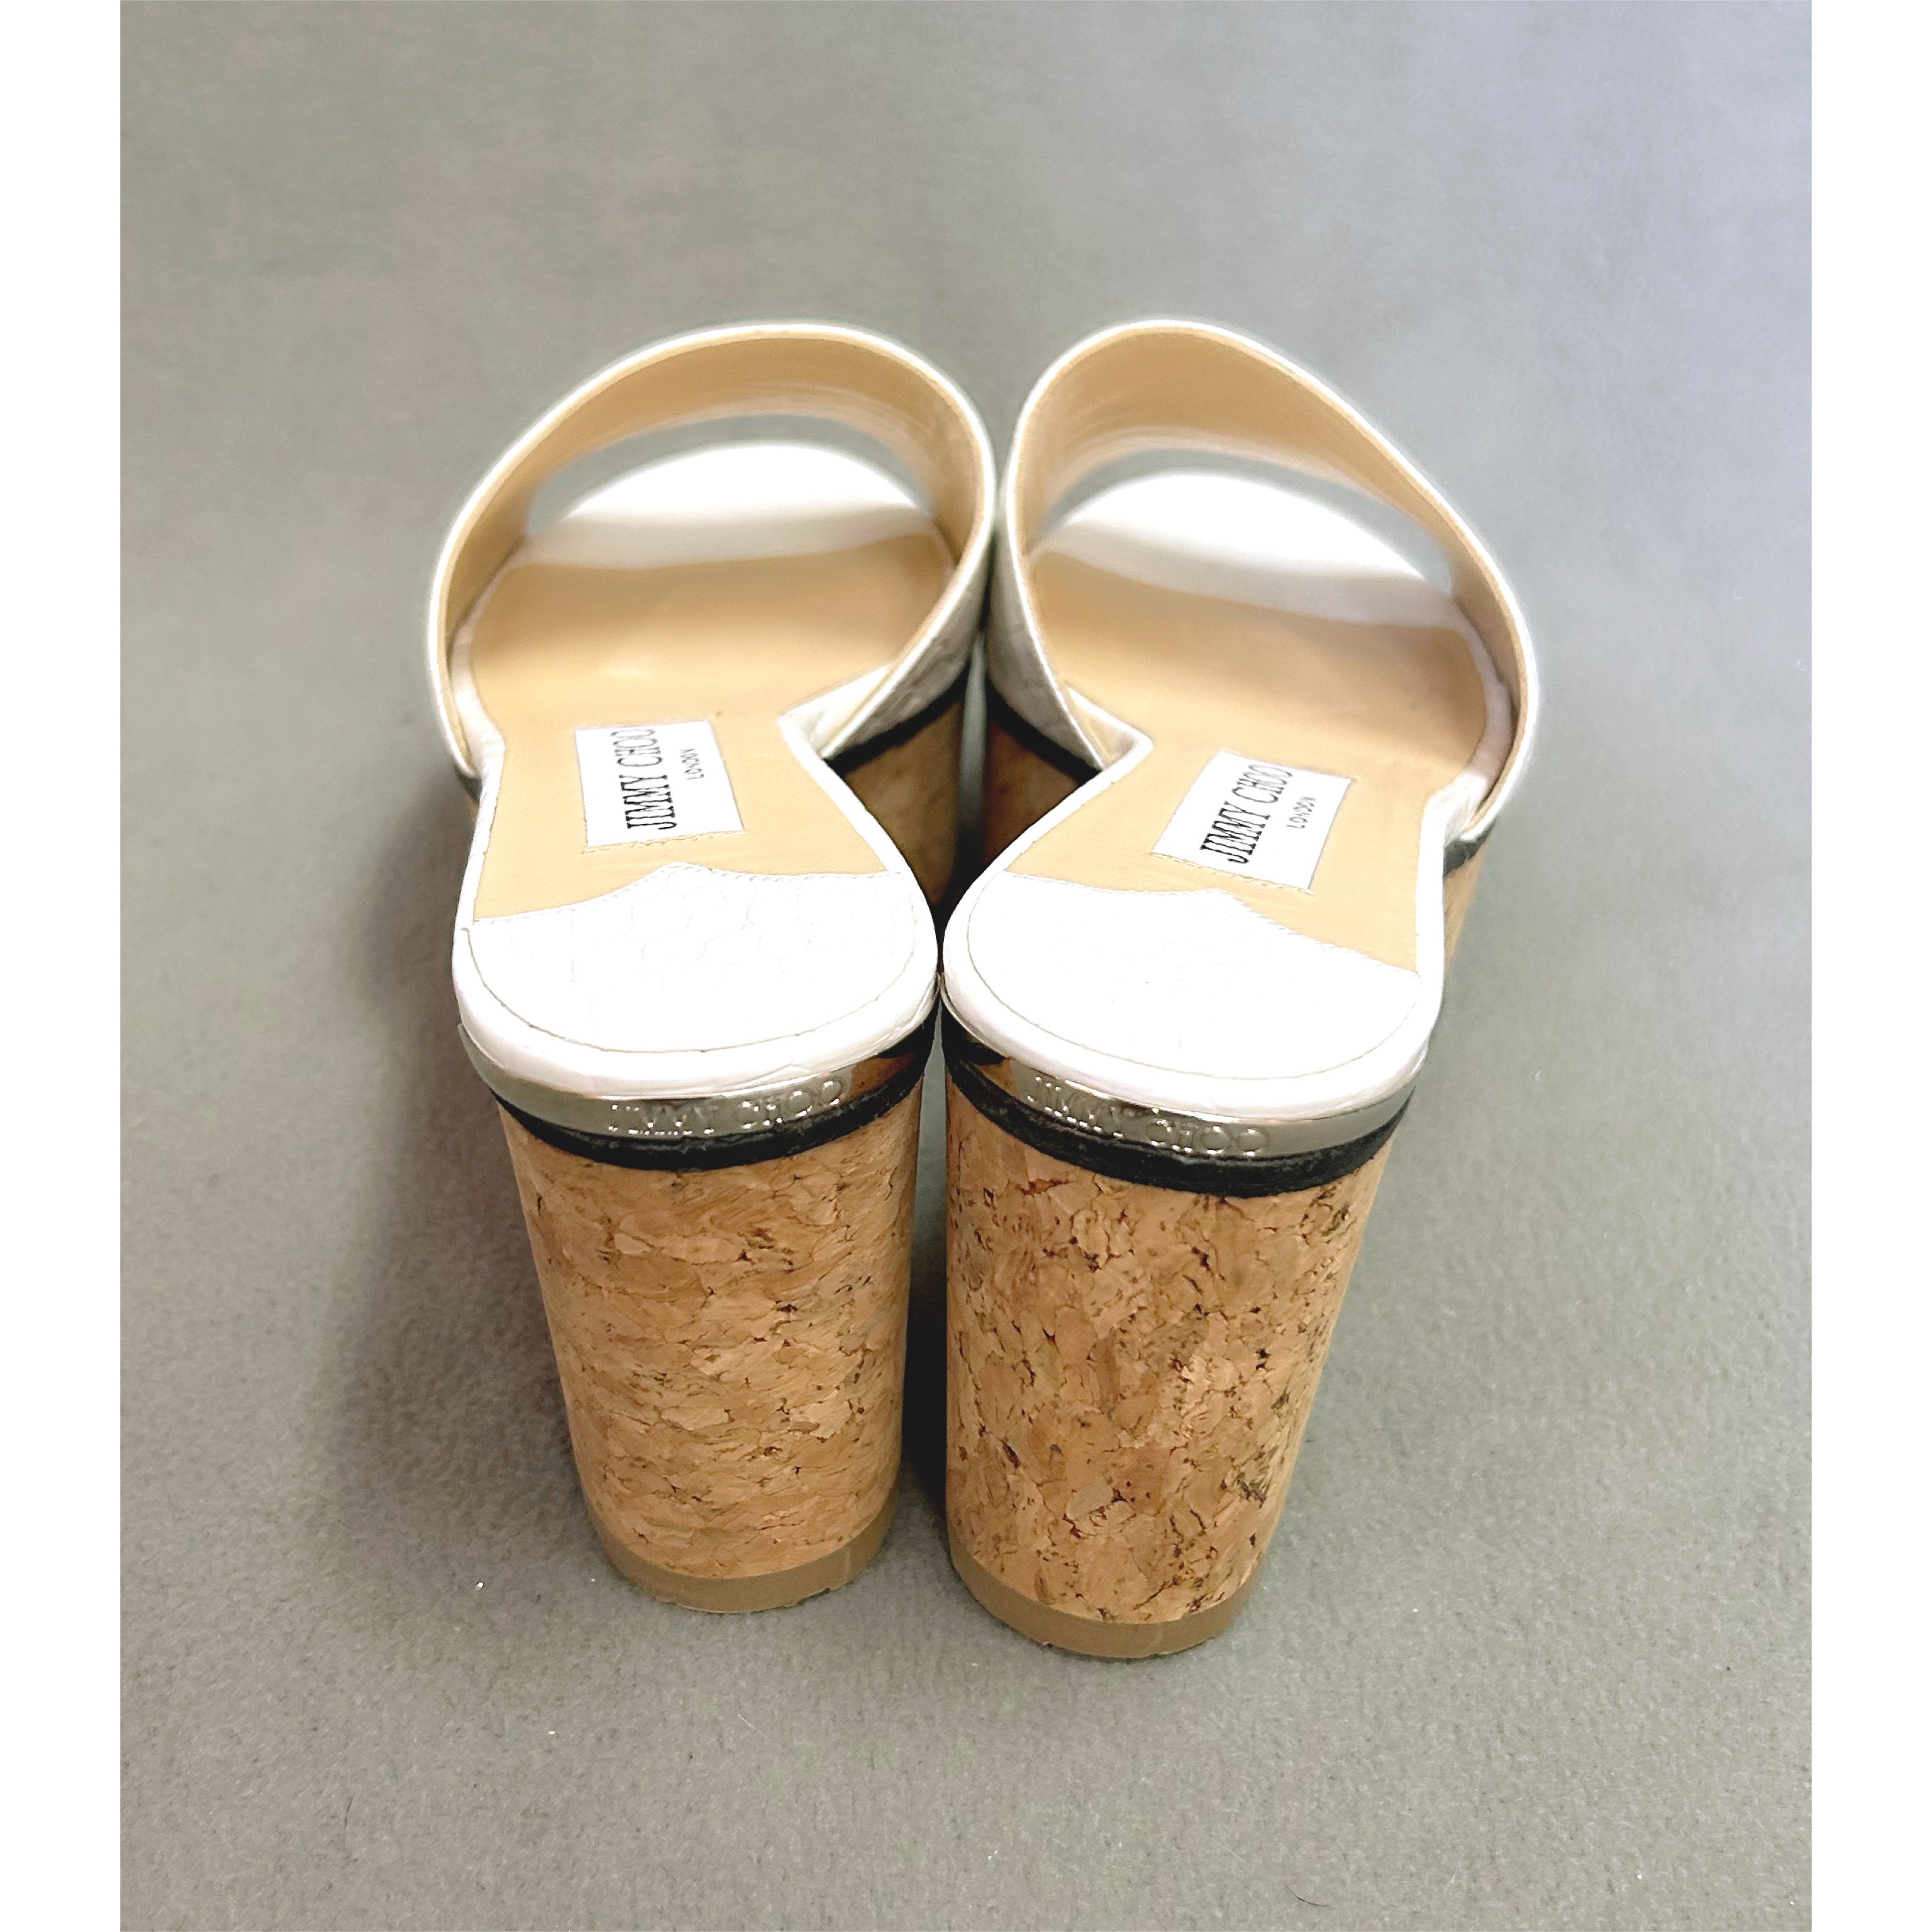 Jimmy Choo white "alligator" Dee Dee sandals, size 6, BRAND NEW W/O TAGS